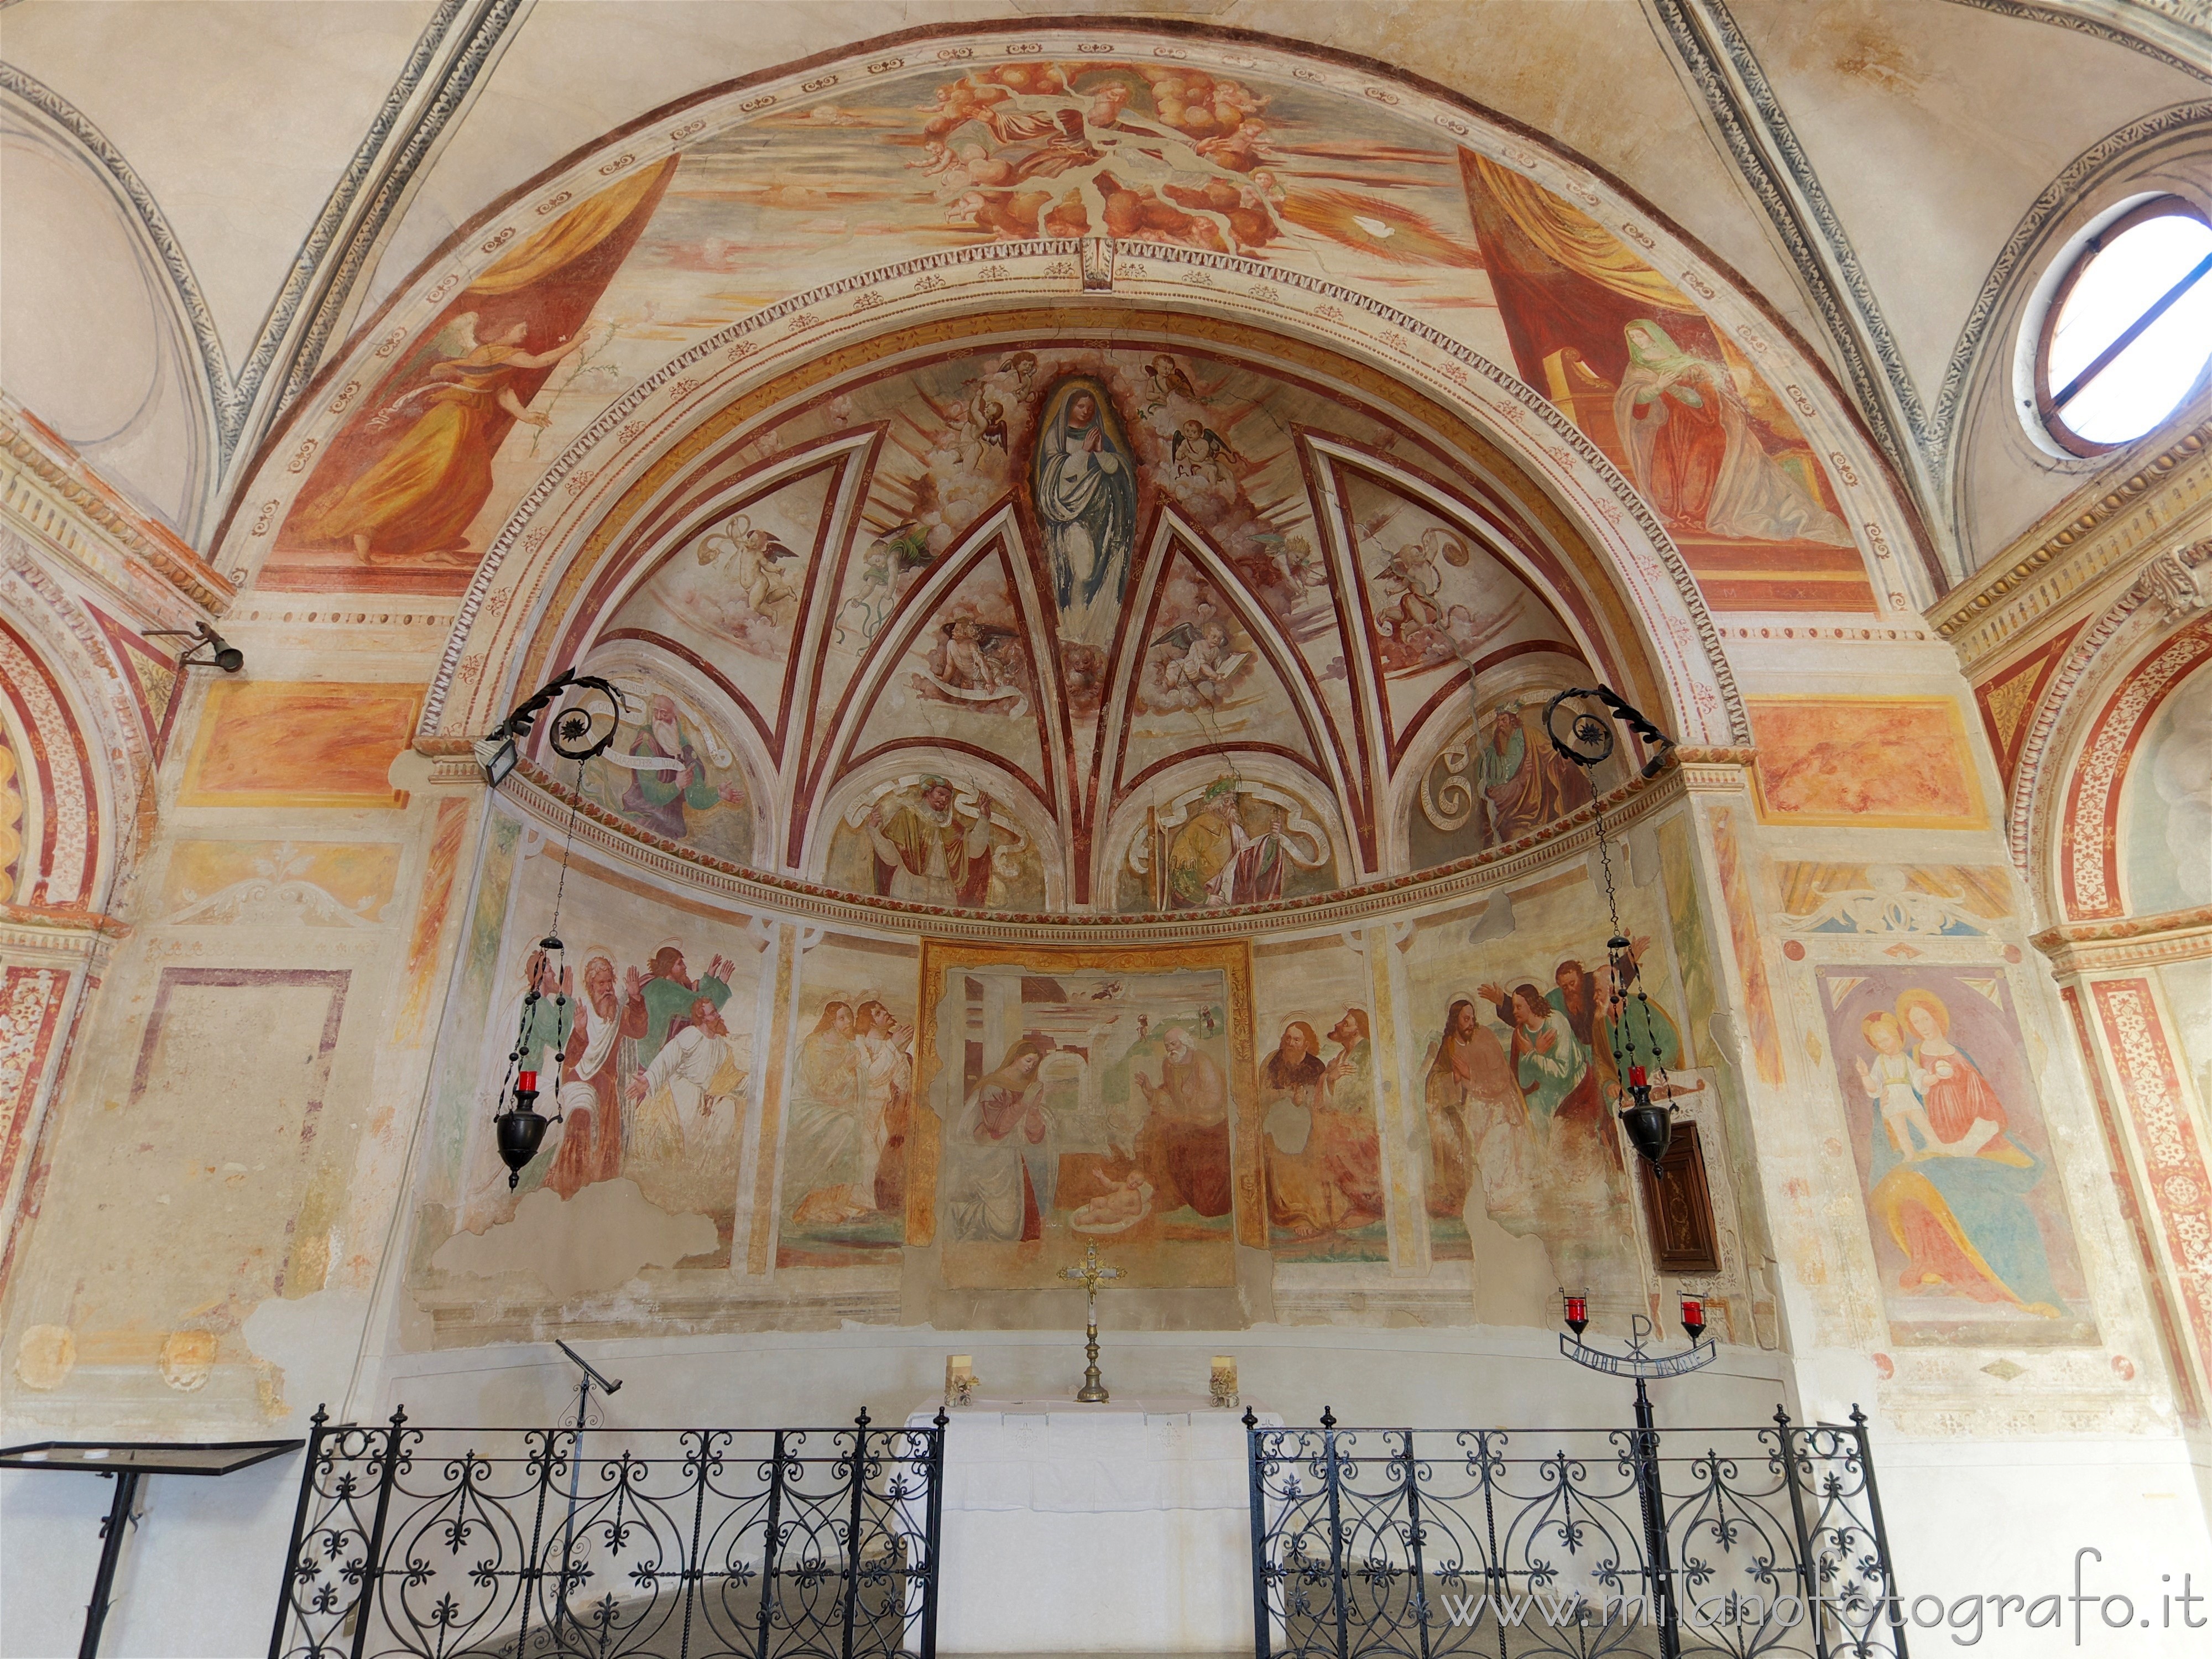 Vimodrone (Milan, Italy): Apse of the Church of Santa Maria Nova al Pilastrello - Vimodrone (Milan, Italy)